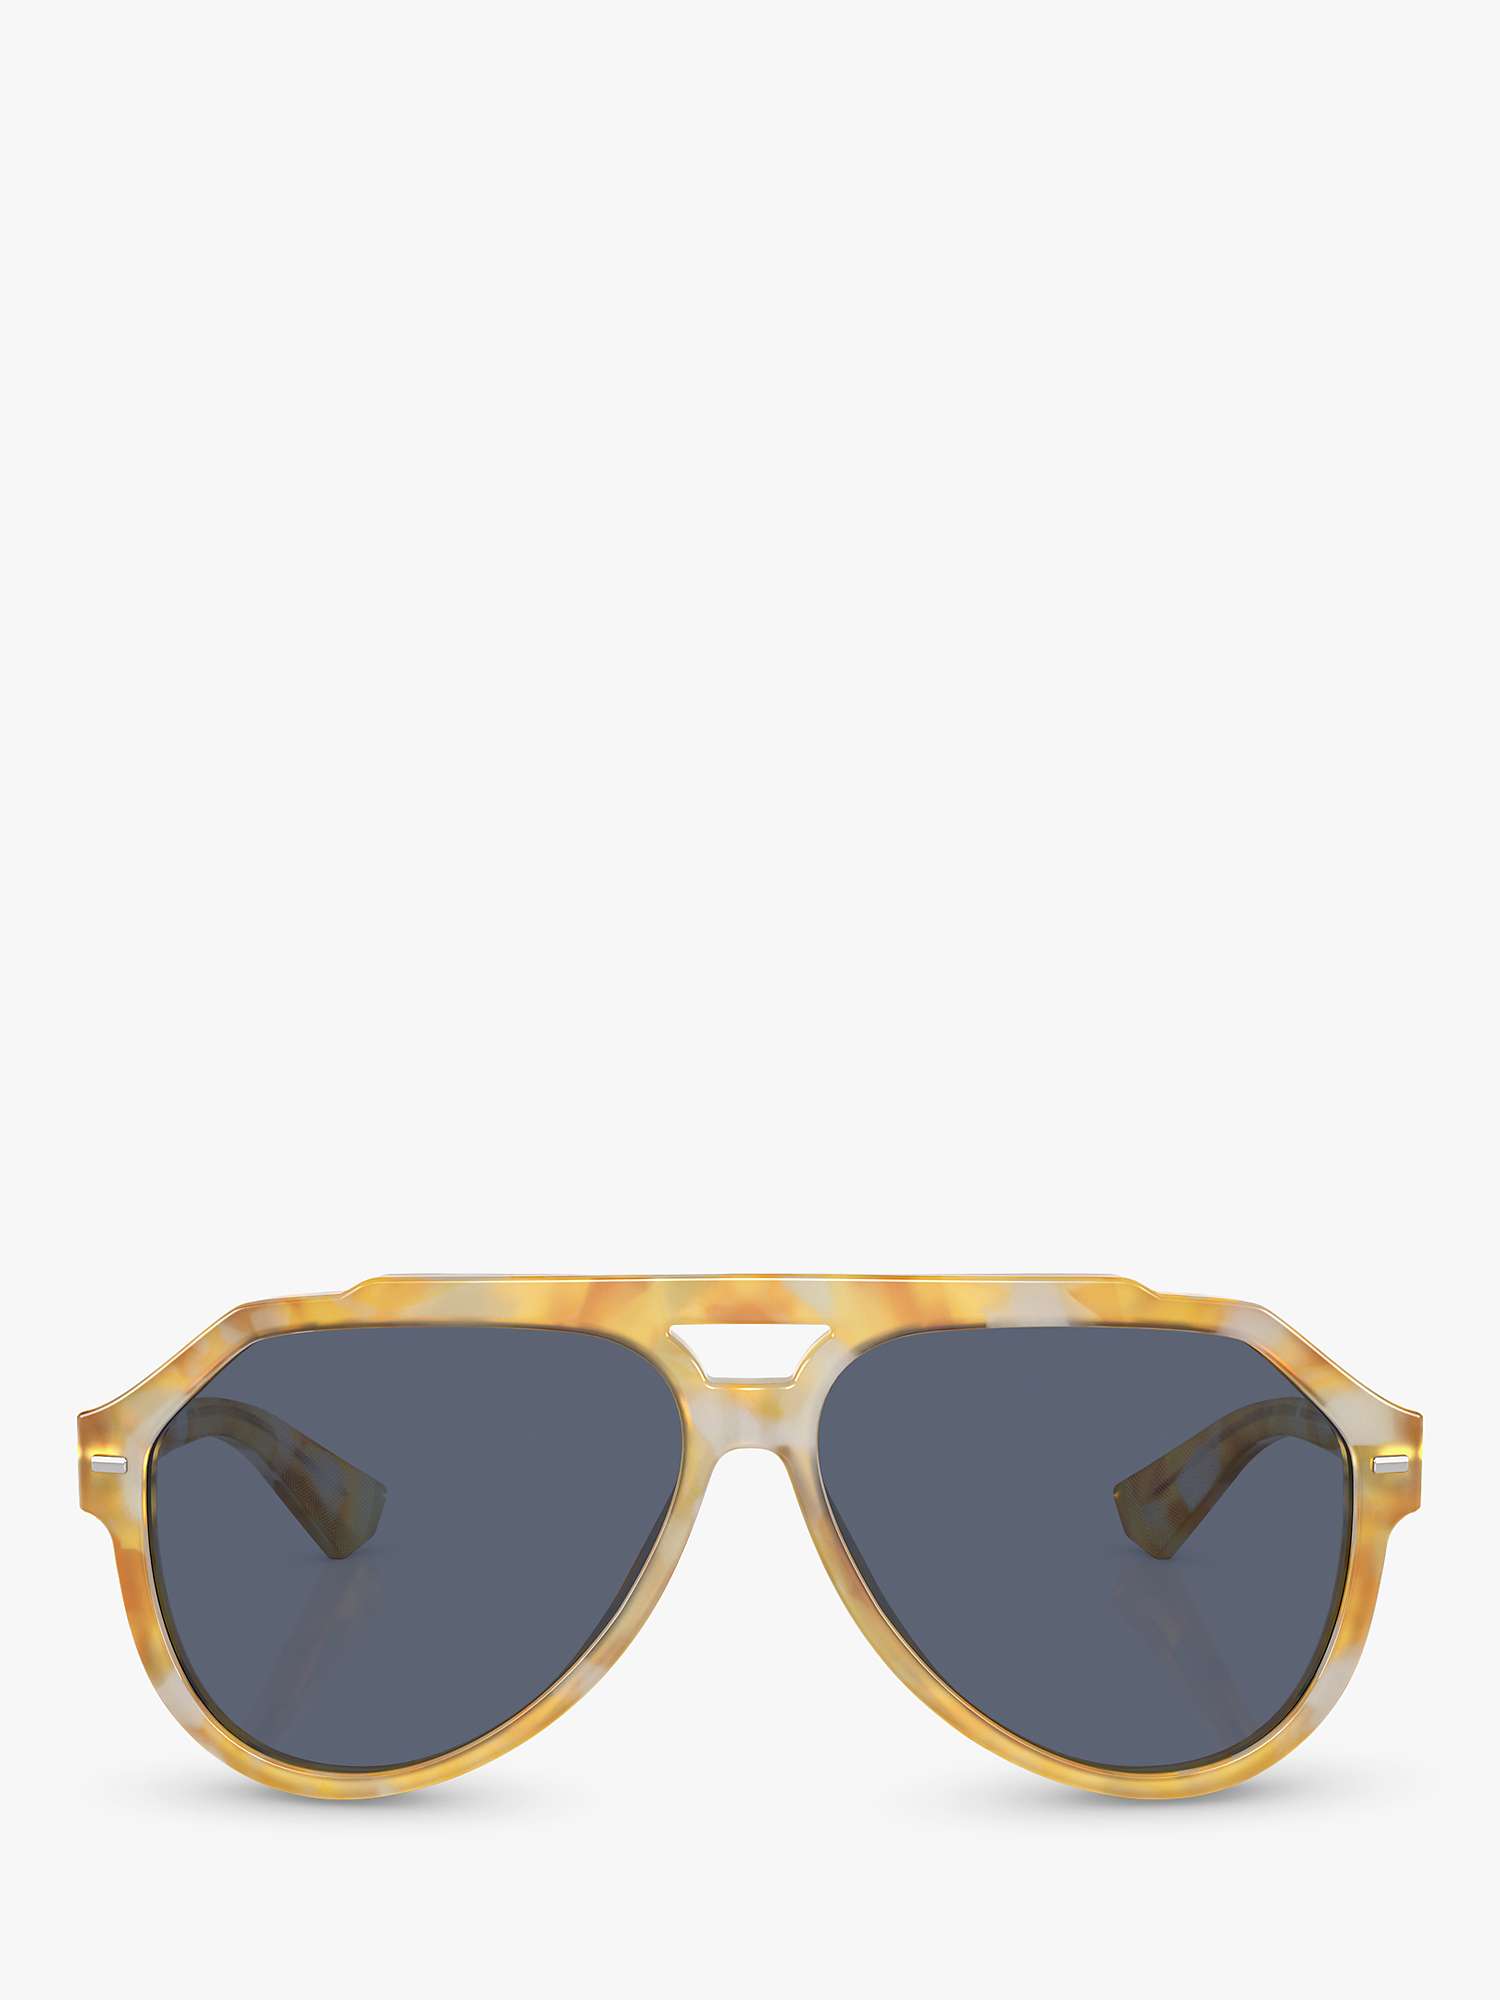 Buy Dolce & Gabbana DG4452 Men's Aviator Sunglasses, Yellow Tortoise/Blue Online at johnlewis.com